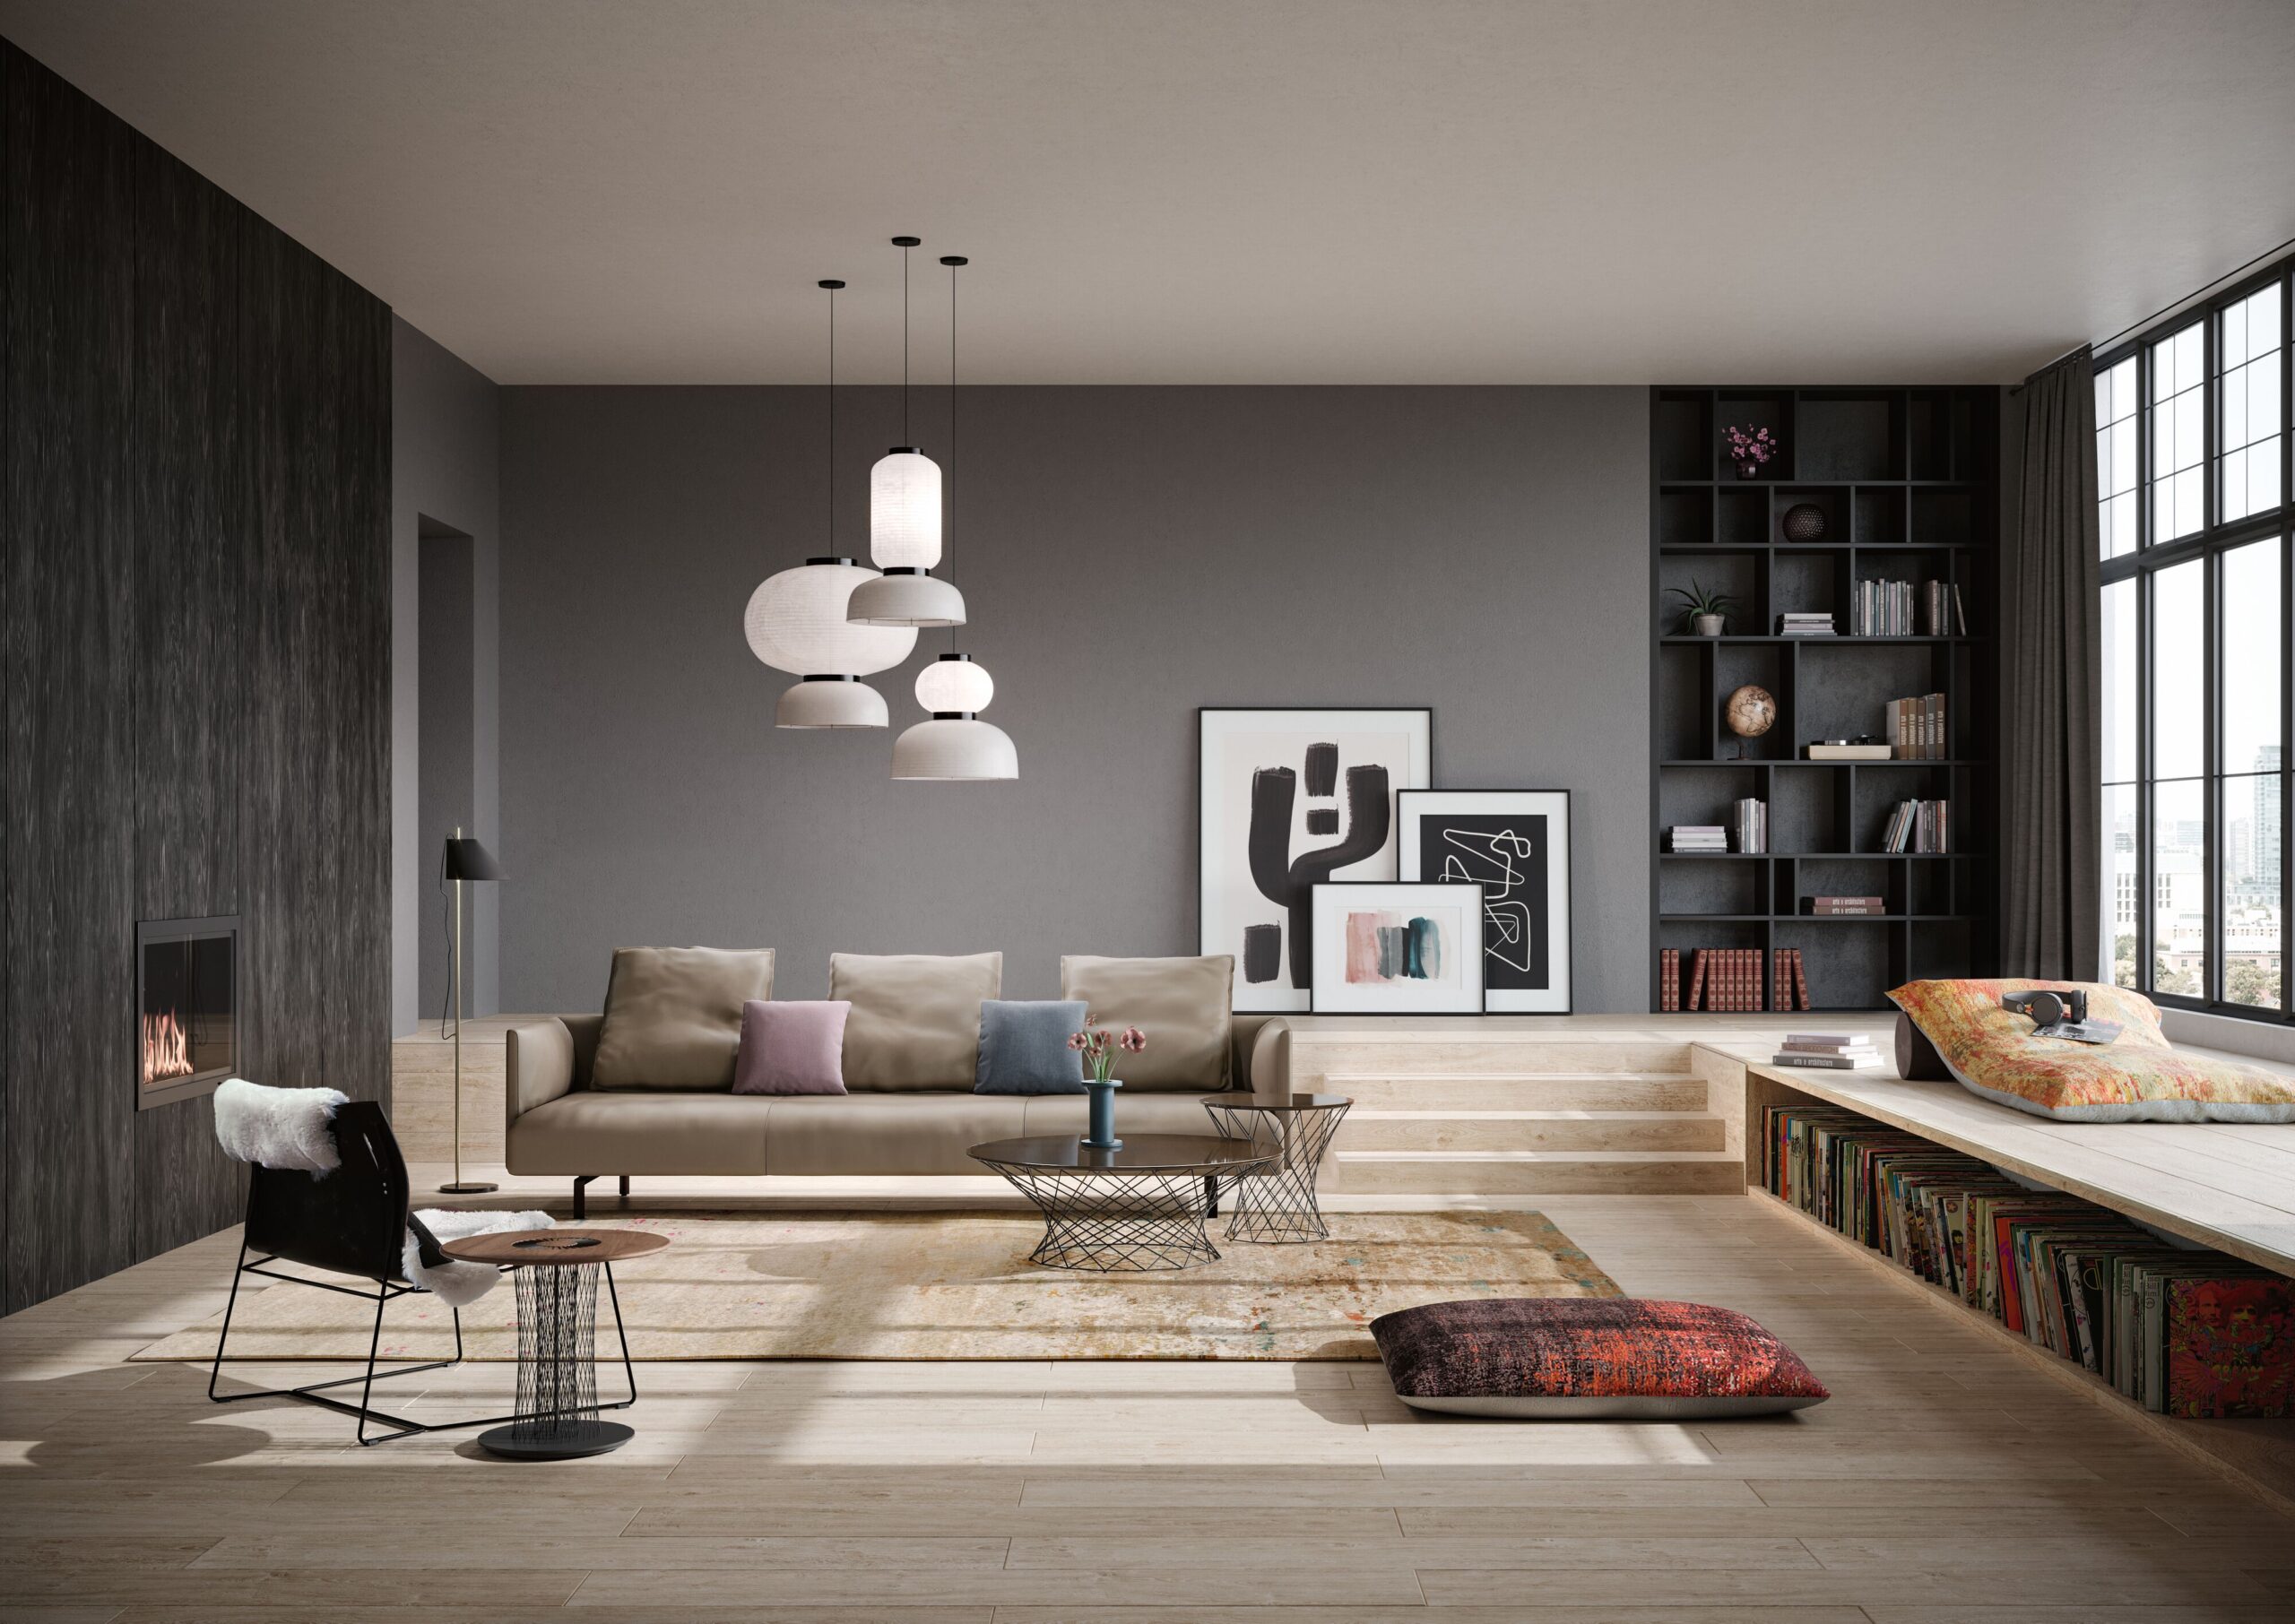 sunken living room with hints of wood, dark walls and designer walter knoll furniture.